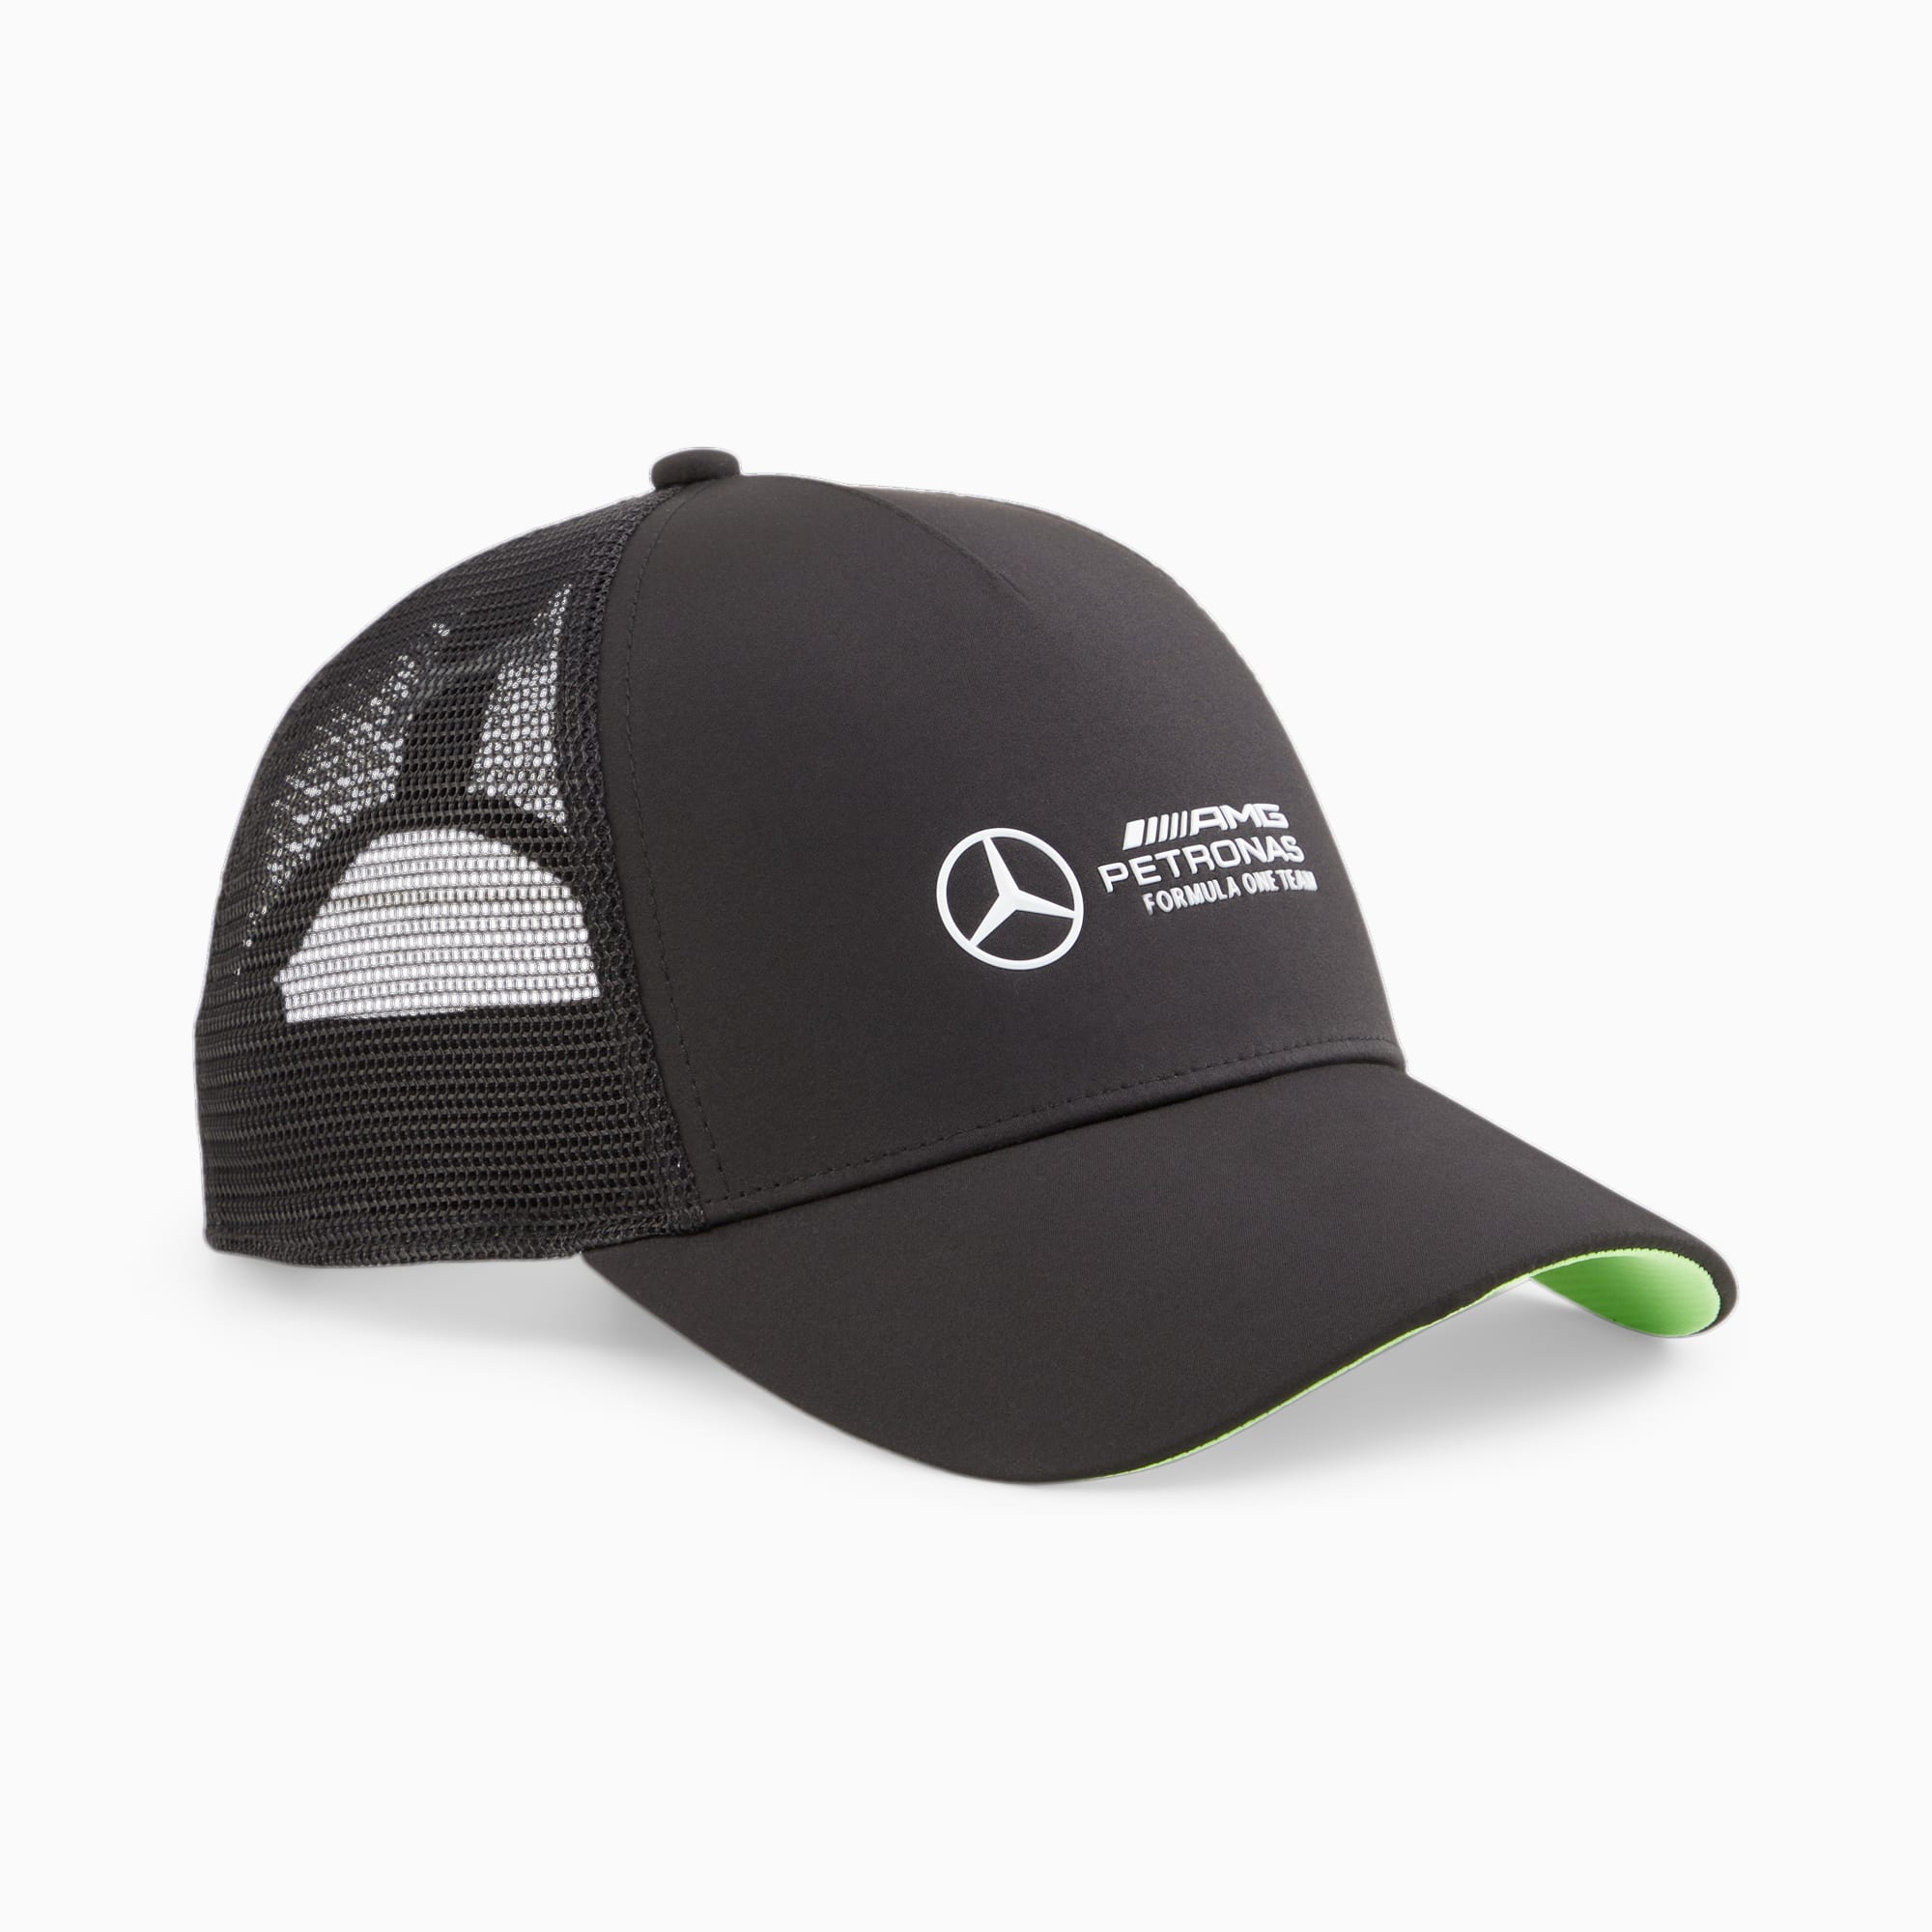 https://images.puma.com/image/upload/f_auto,q_auto,b_rgb:fafafa,w_2000,h_2000/global/025357/01/fnd/EEA/fmt/png/Cappello-con-visiera-Mercedes-AMG-Petronas-Motorsport-da-uomo